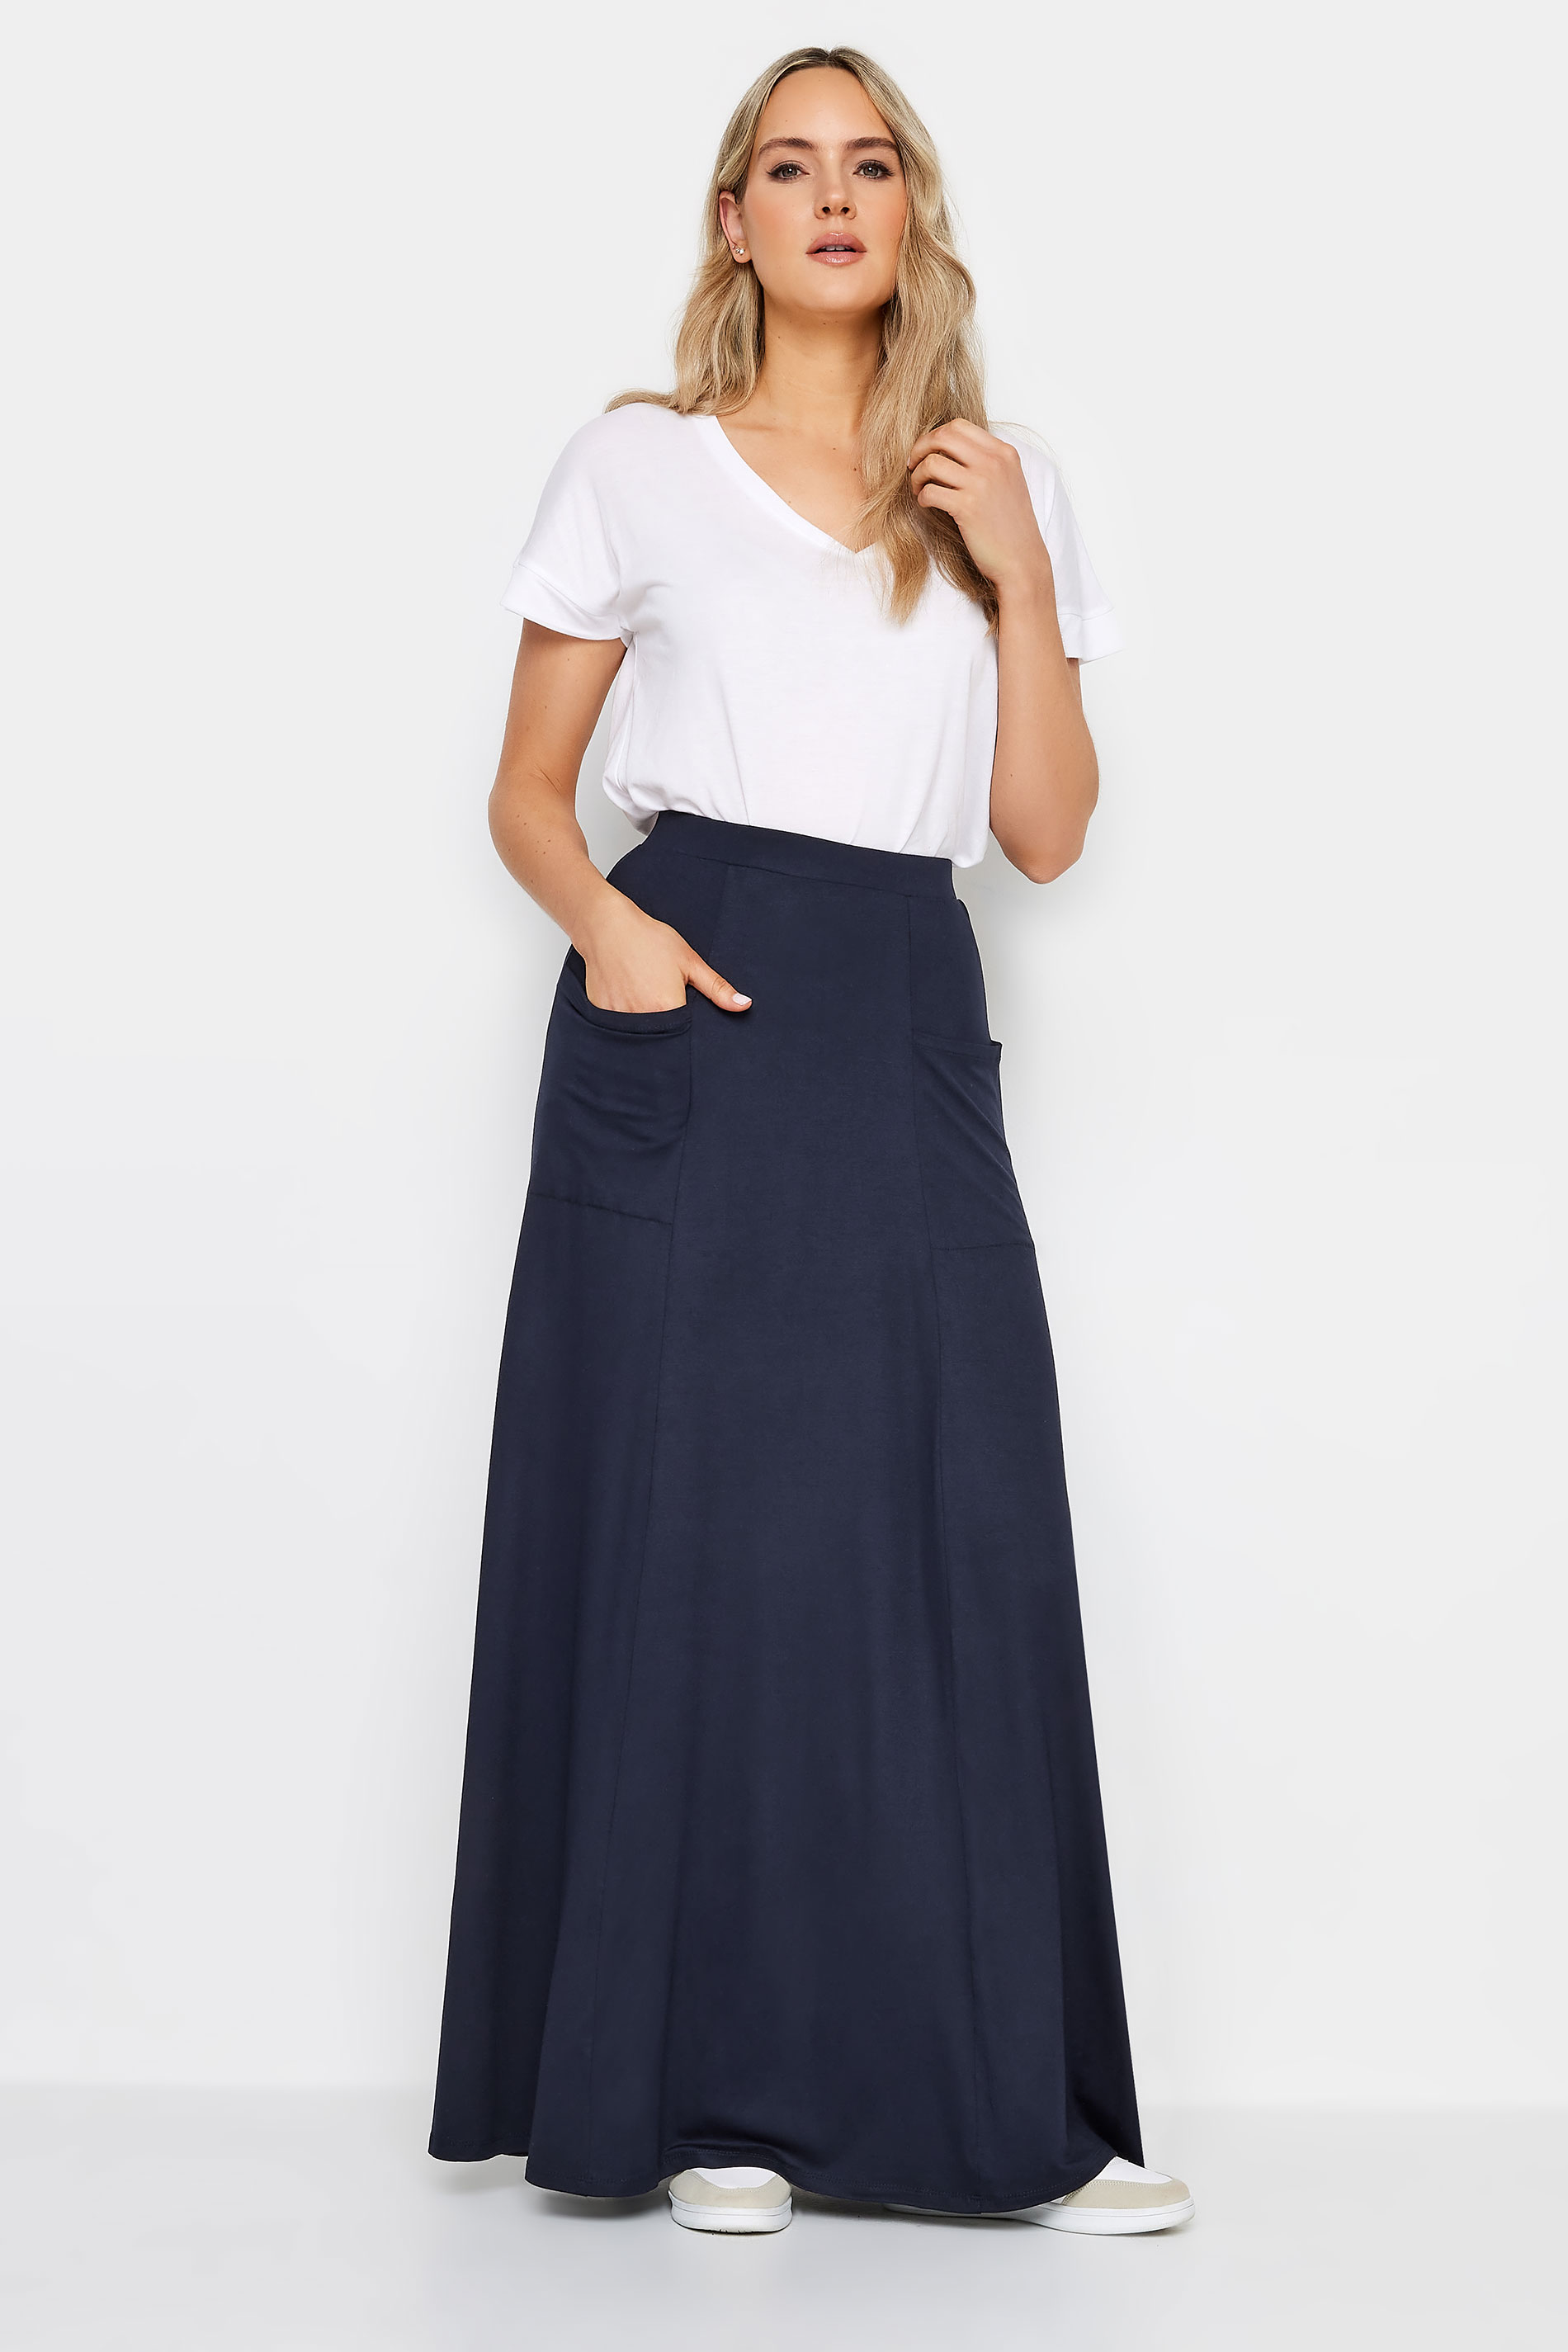 LTS Tall Womens Navy Blue Fit & Flare Maxi Skirt | Long Tall Sally 1